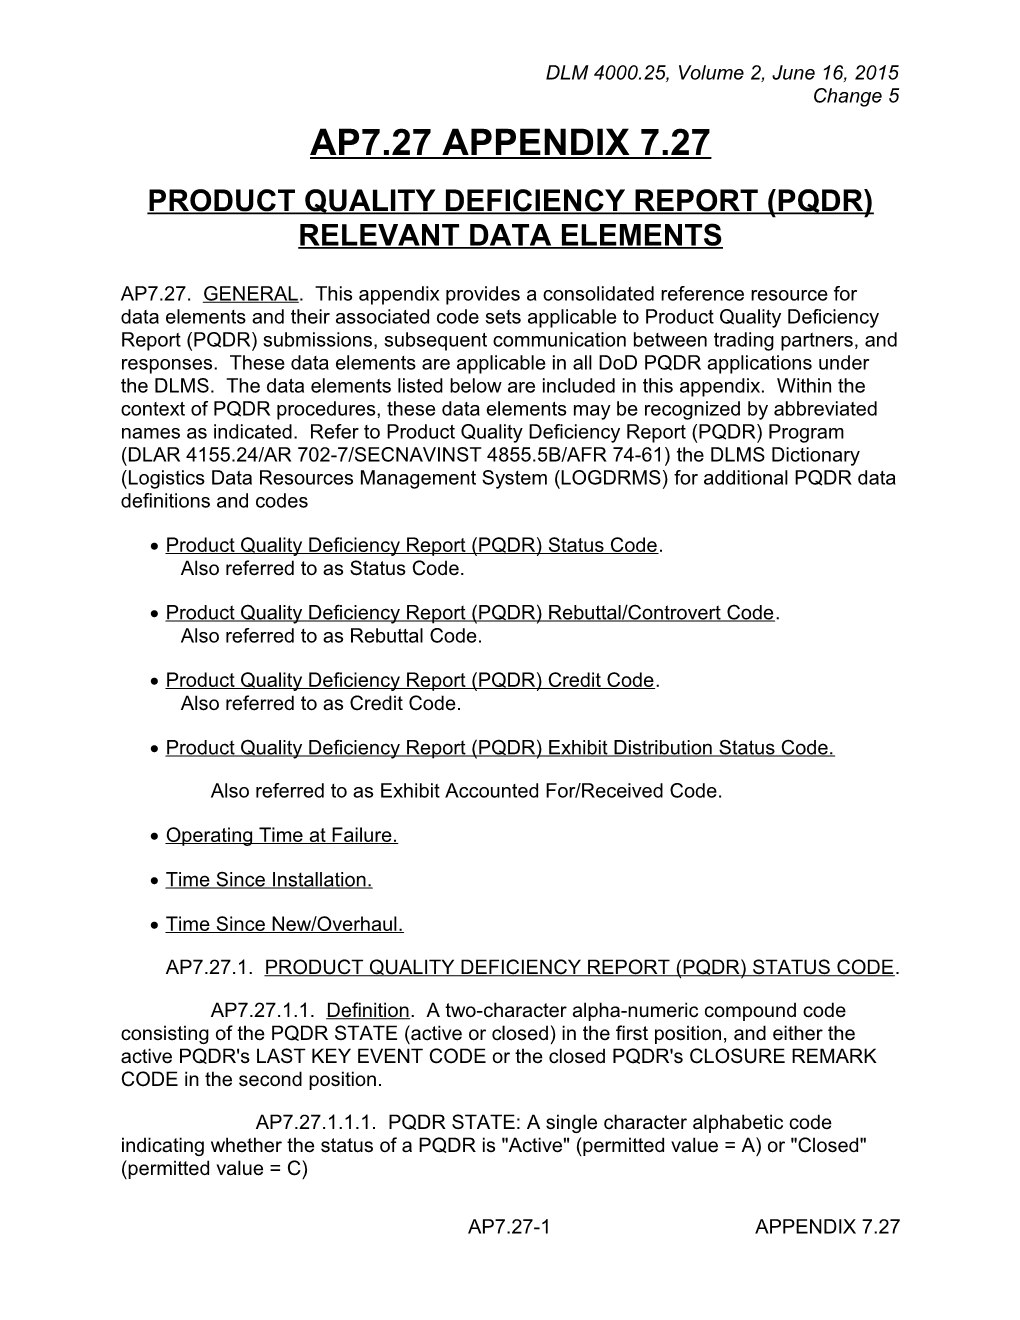 Appendix 7.27 - Product Quality Deficiency Report (PQDR) Relevant Data Elements